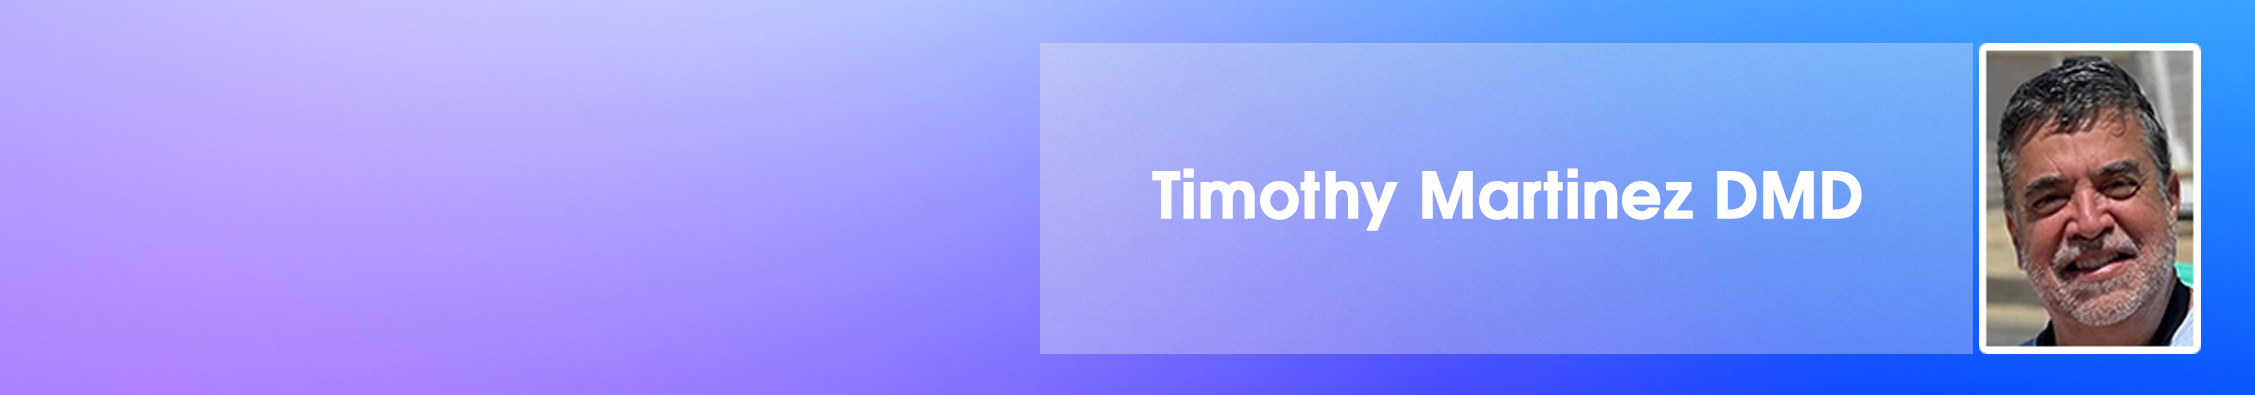 Timothy Martinez DMD's profile banner